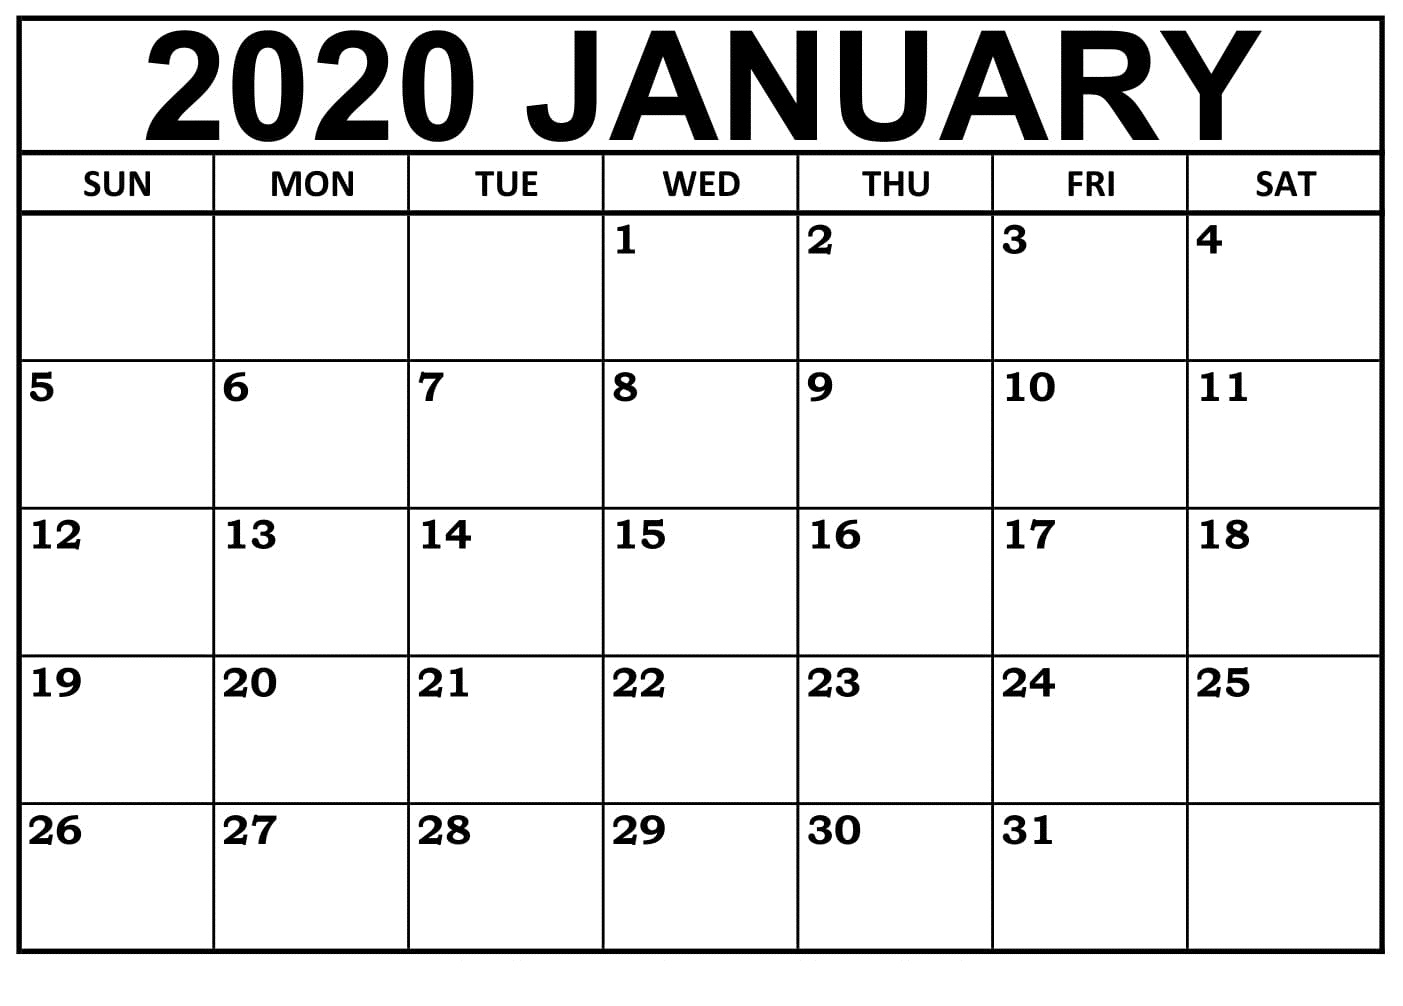 January 2020 Blank Calendar